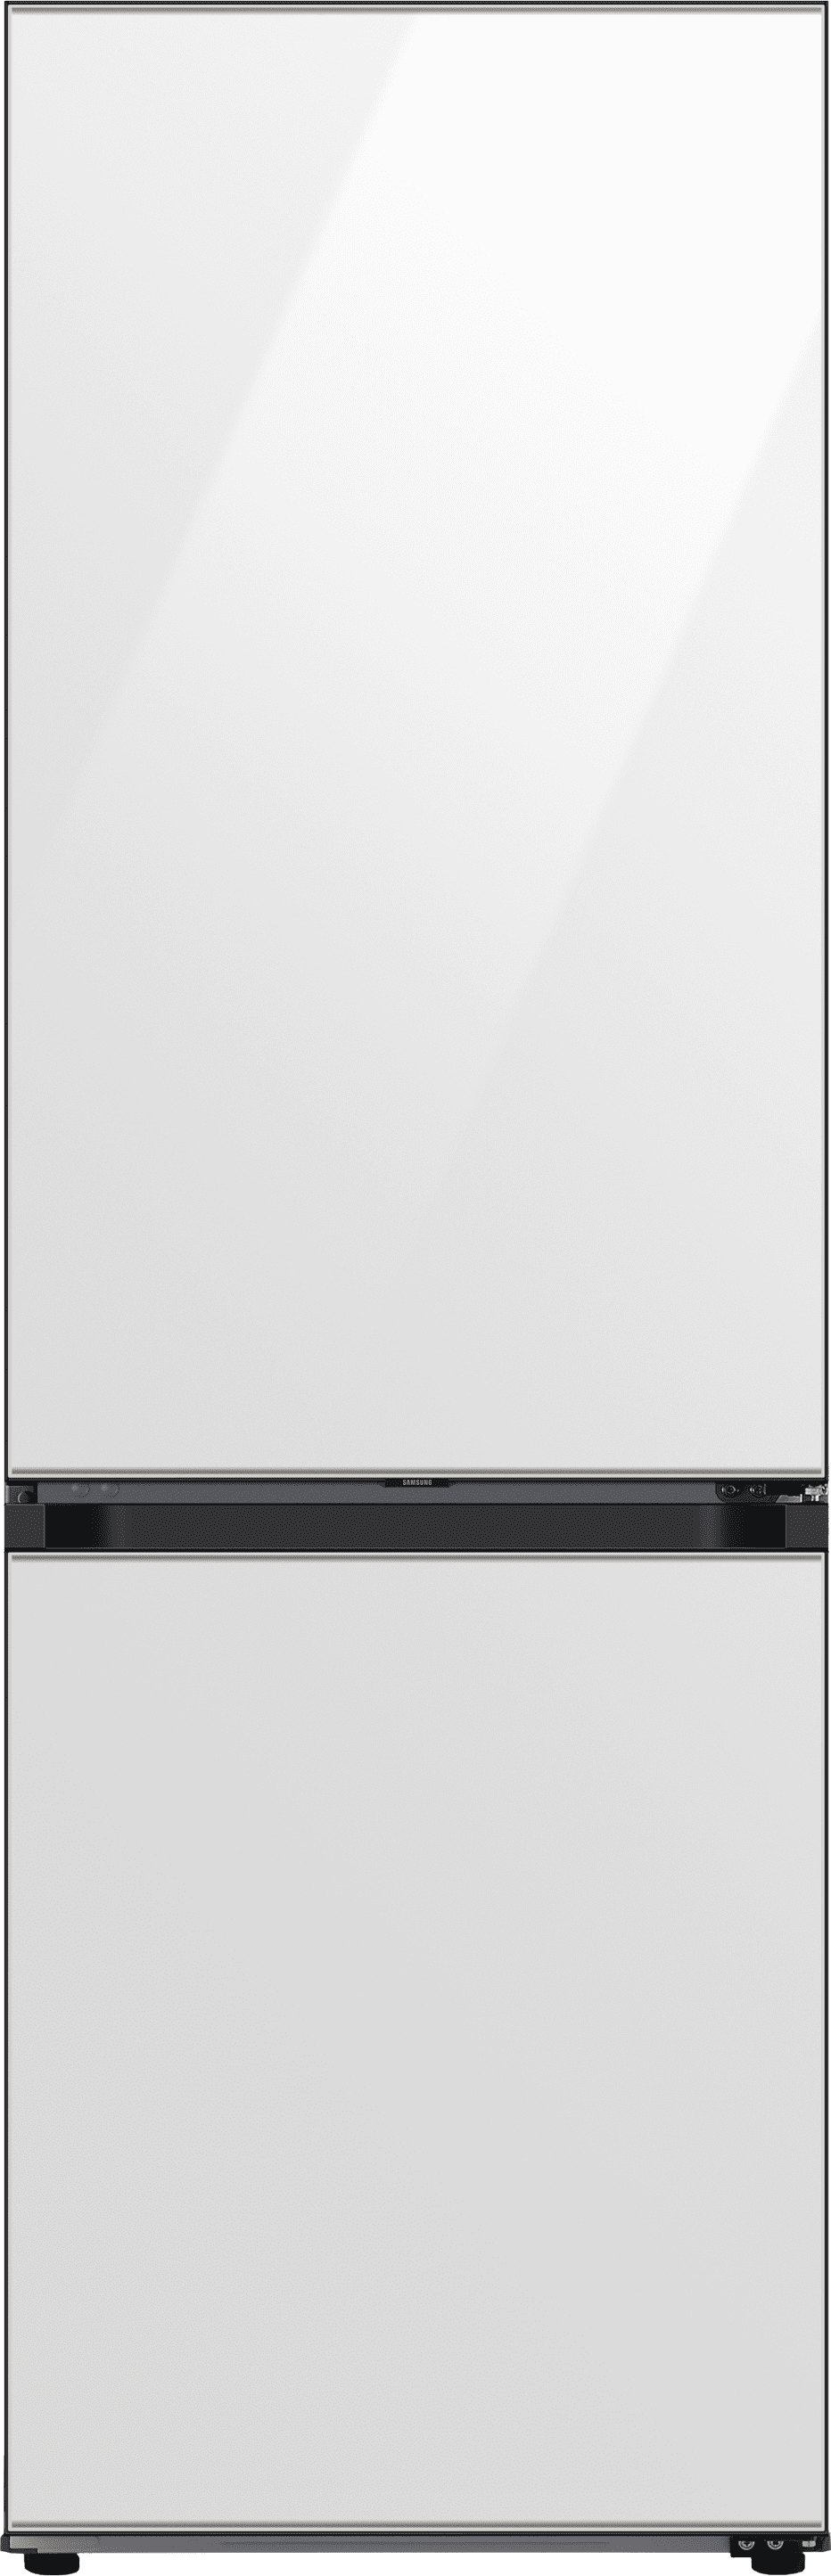 Samsung Bespoke RB34A6B2E12 70/30 Frost Free Fridge Freezer - Clean White - E Rated, White